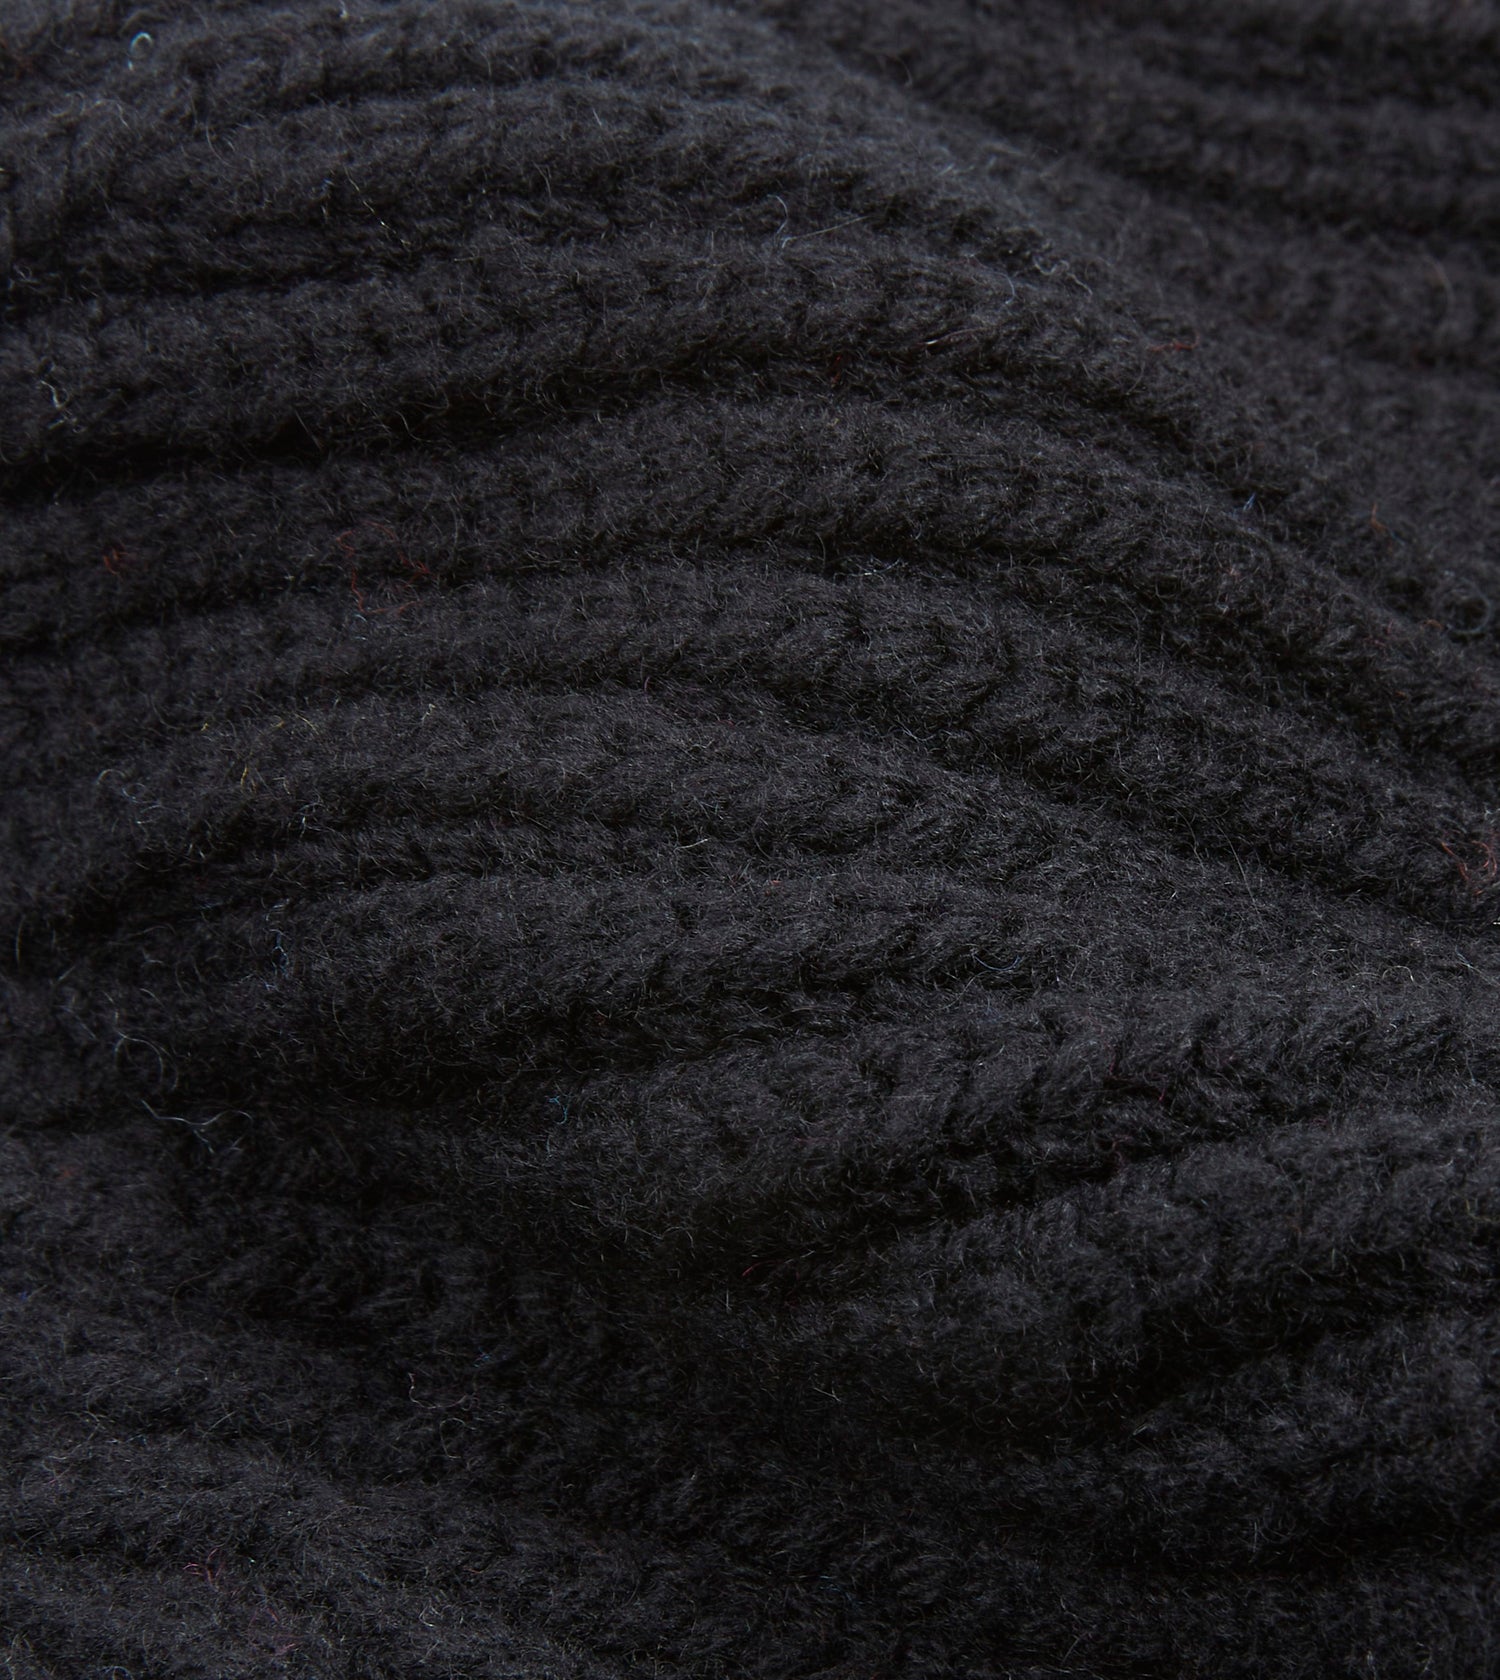 Black Cashmere Ribbed Knit Cap